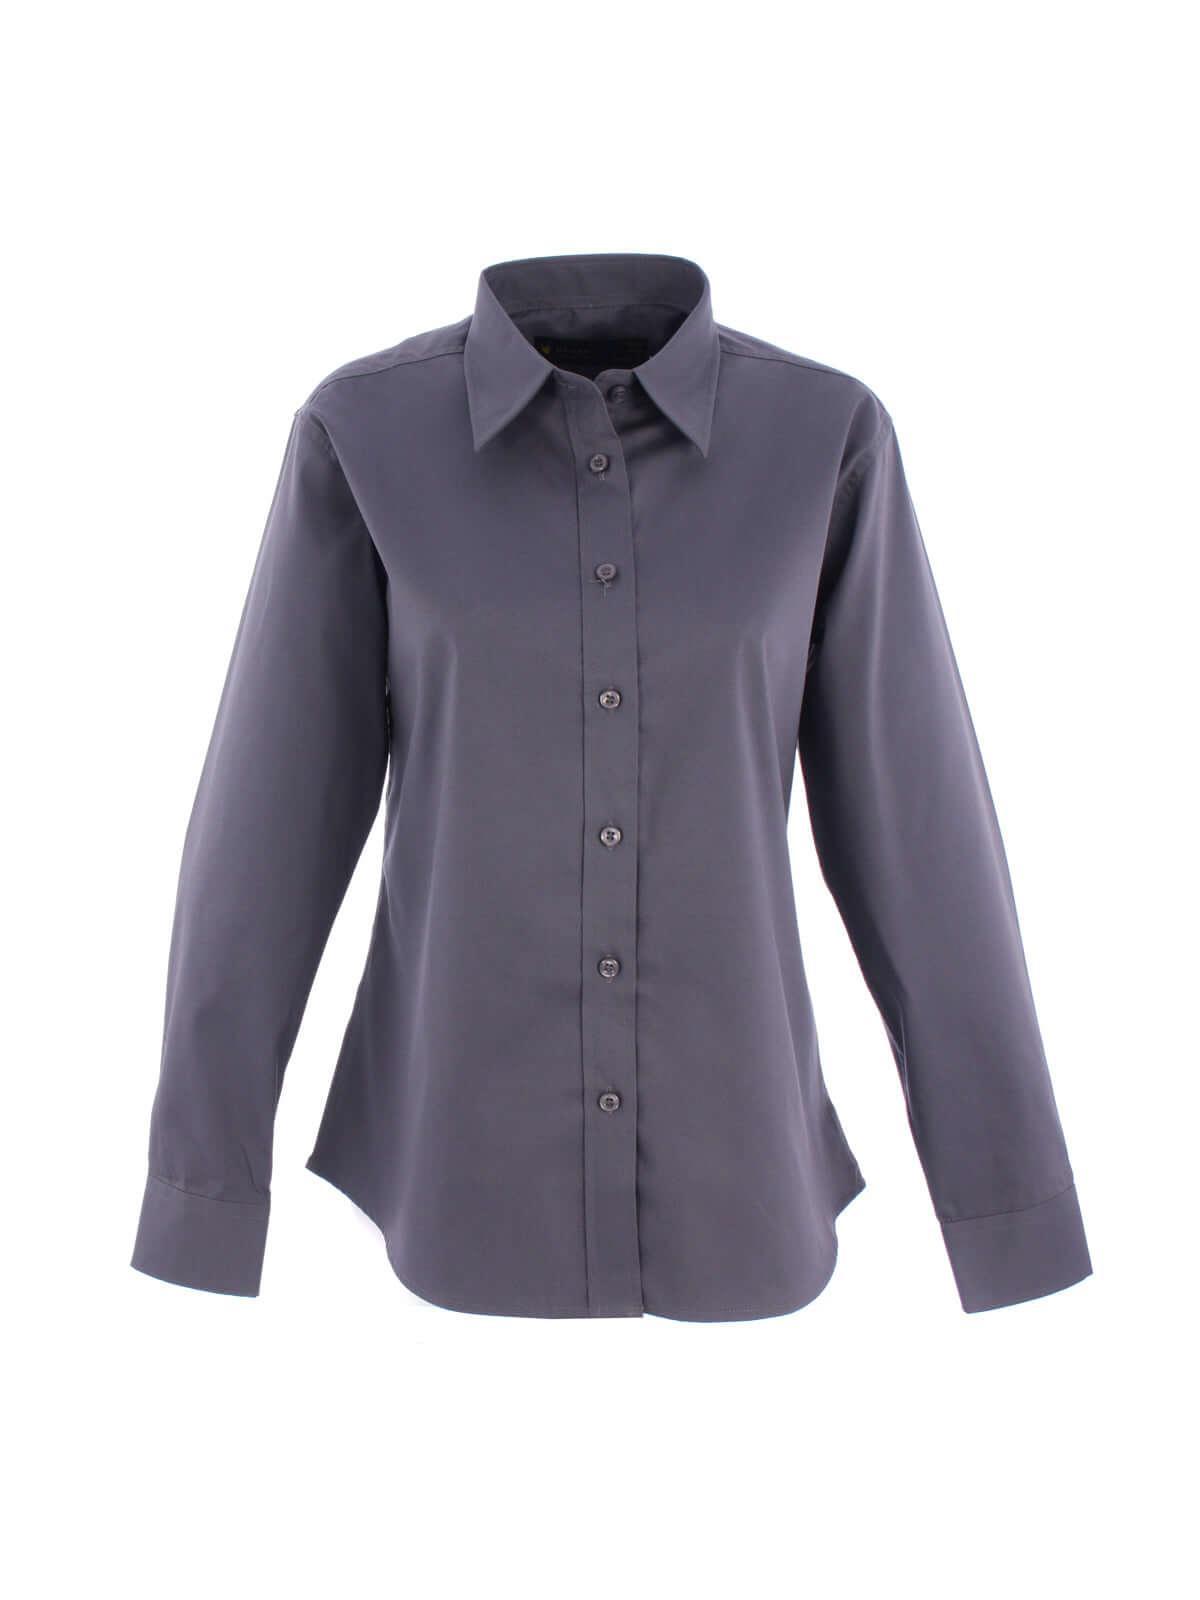 Pegasus Uniform Ladies Pinpoint Oxford Long Sleeve Shirt - Charcoal